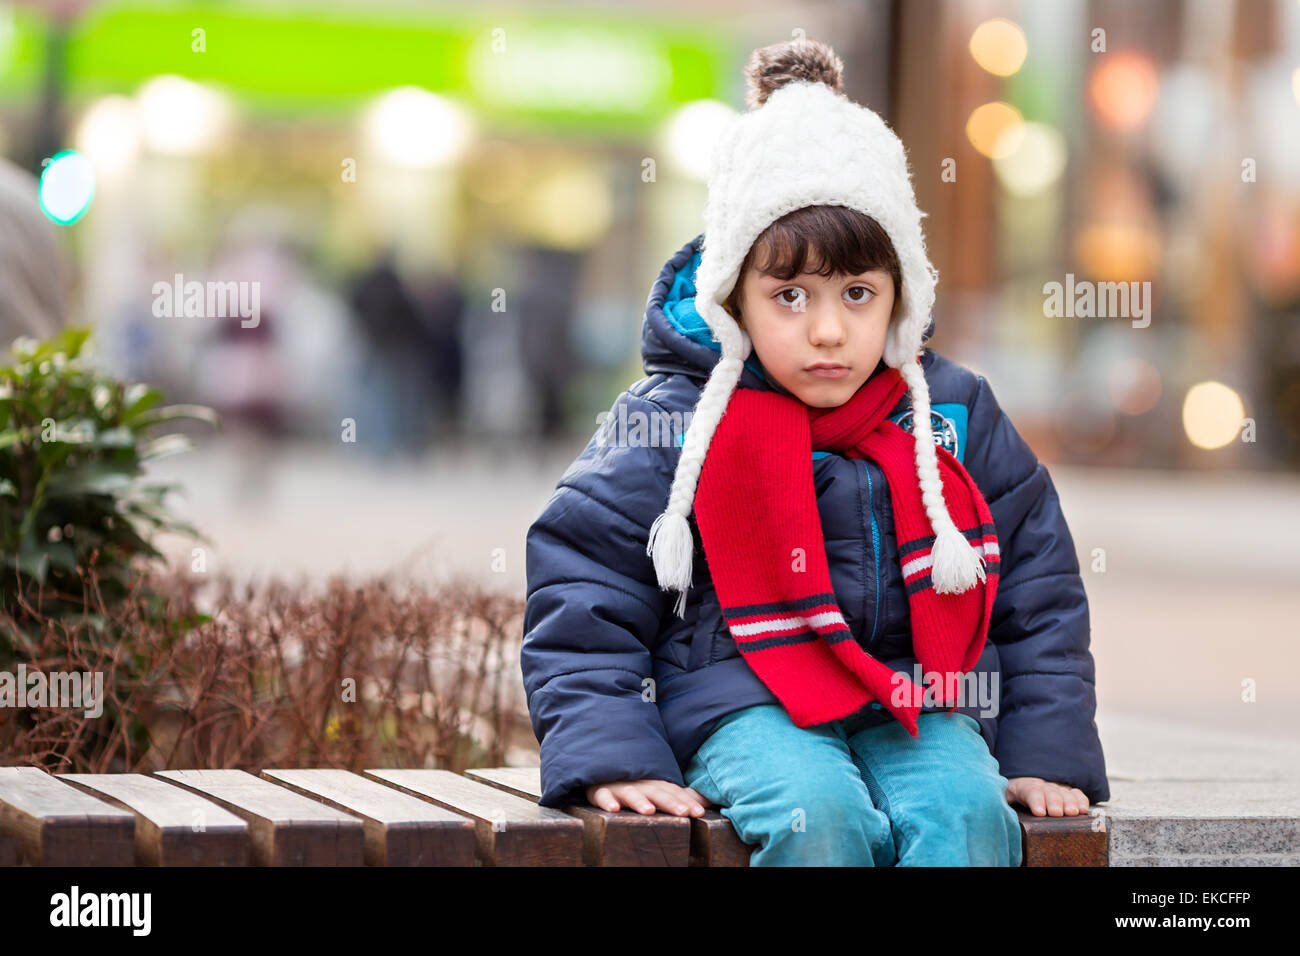 Sad boy sitting on a bench Stock Photo